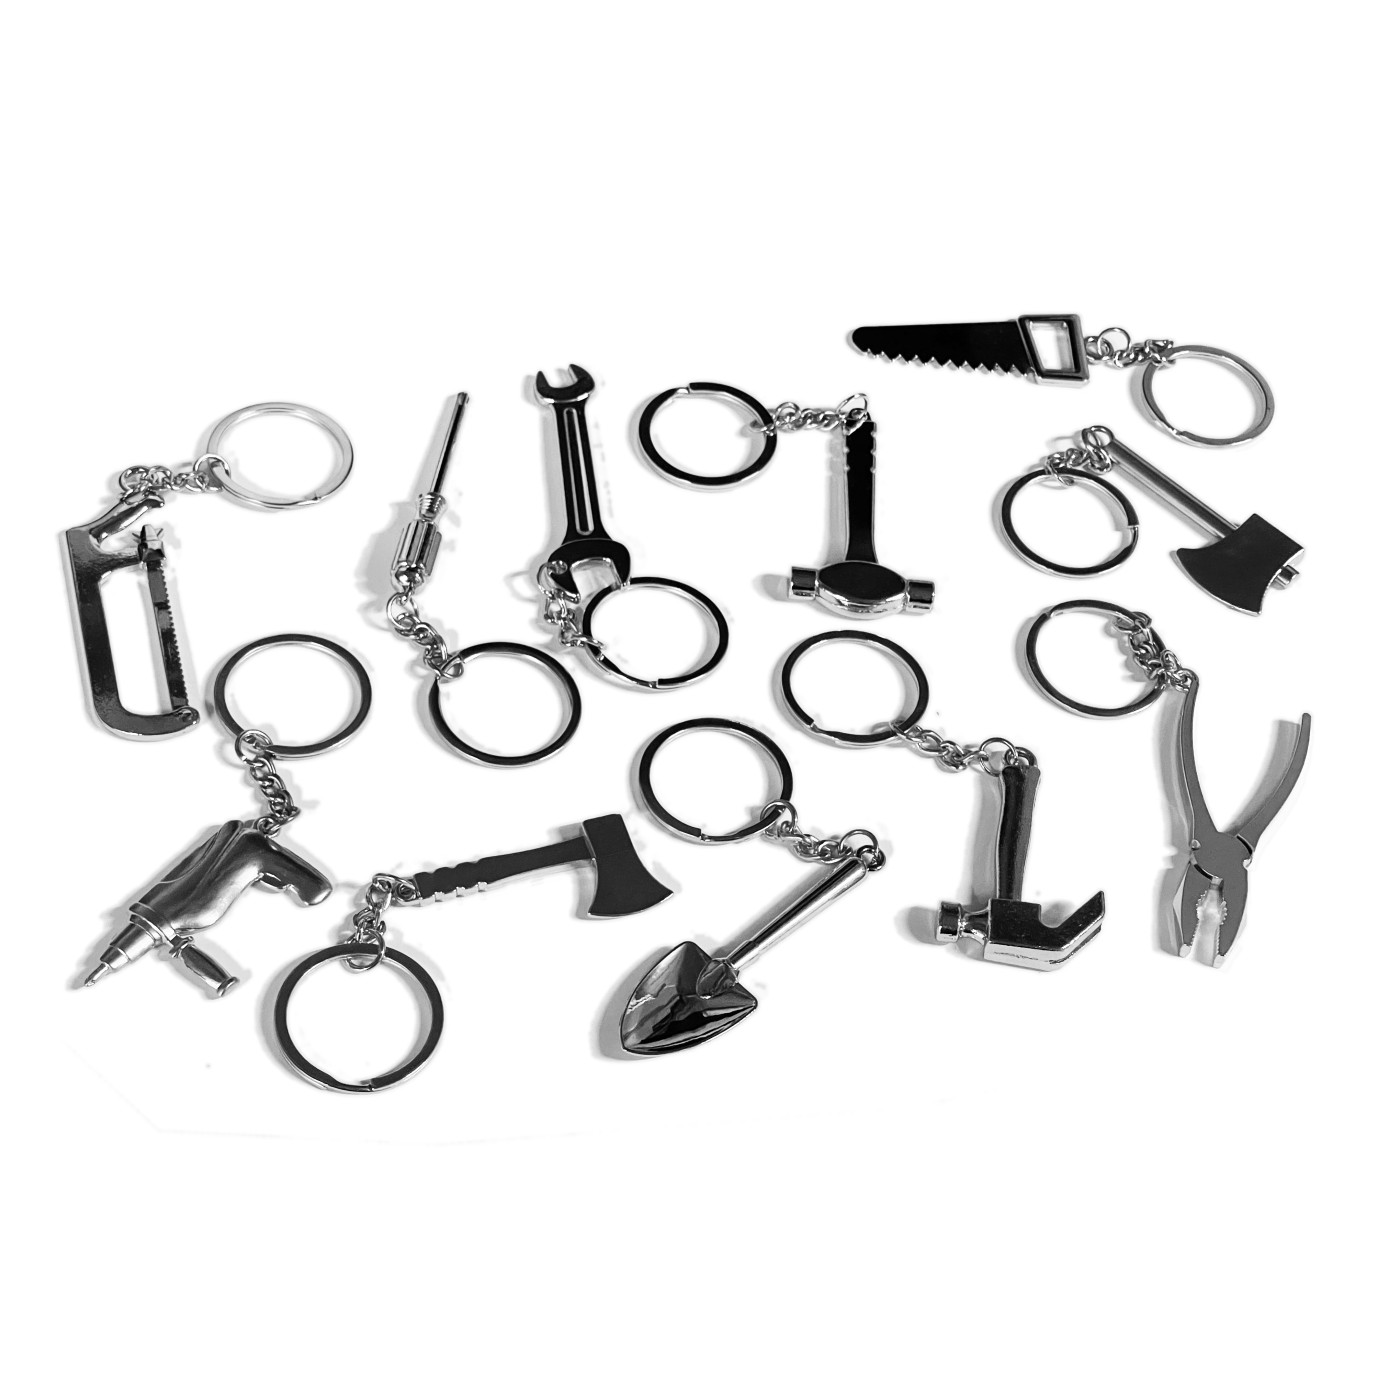 Belo presente: conjunto de 11 chaveiros (ferramentas)